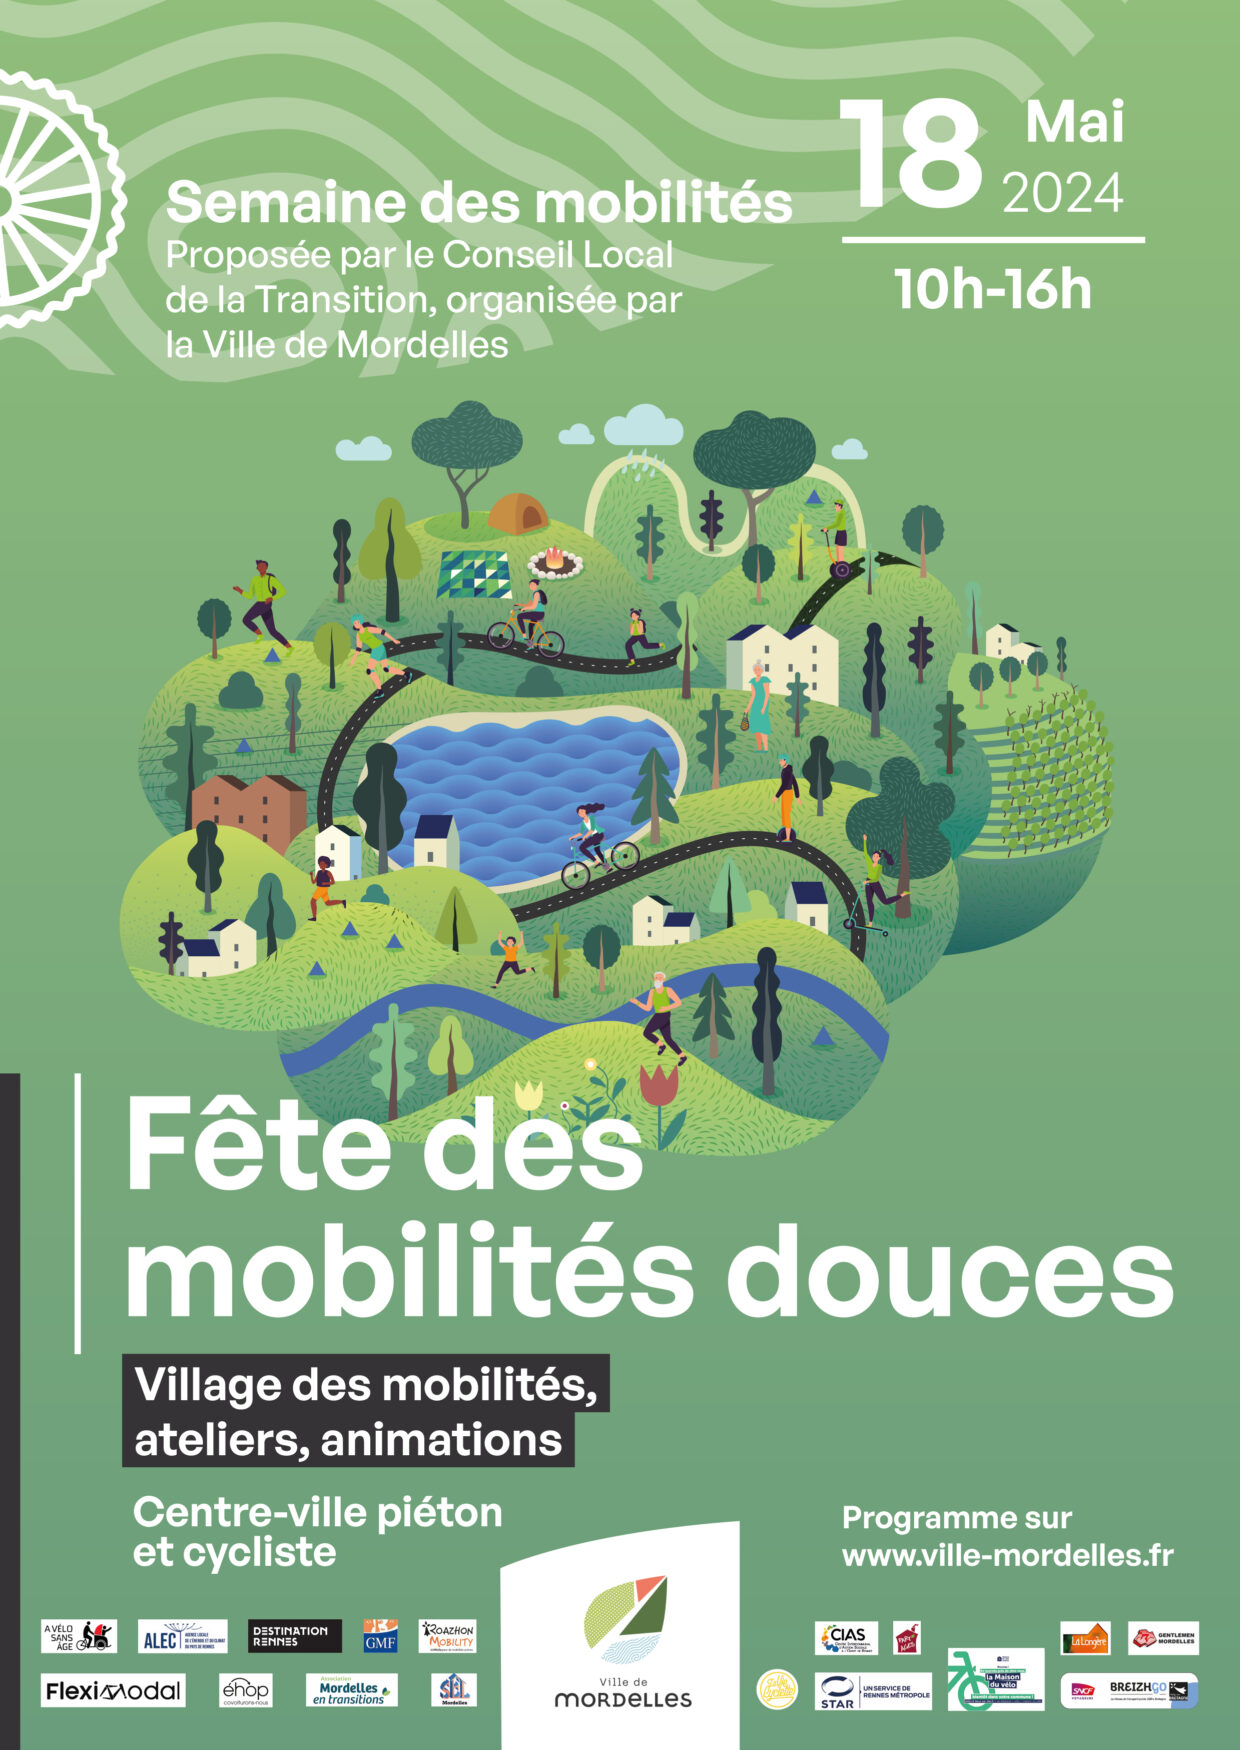 Aff_semaine_mobilites_2024.indd